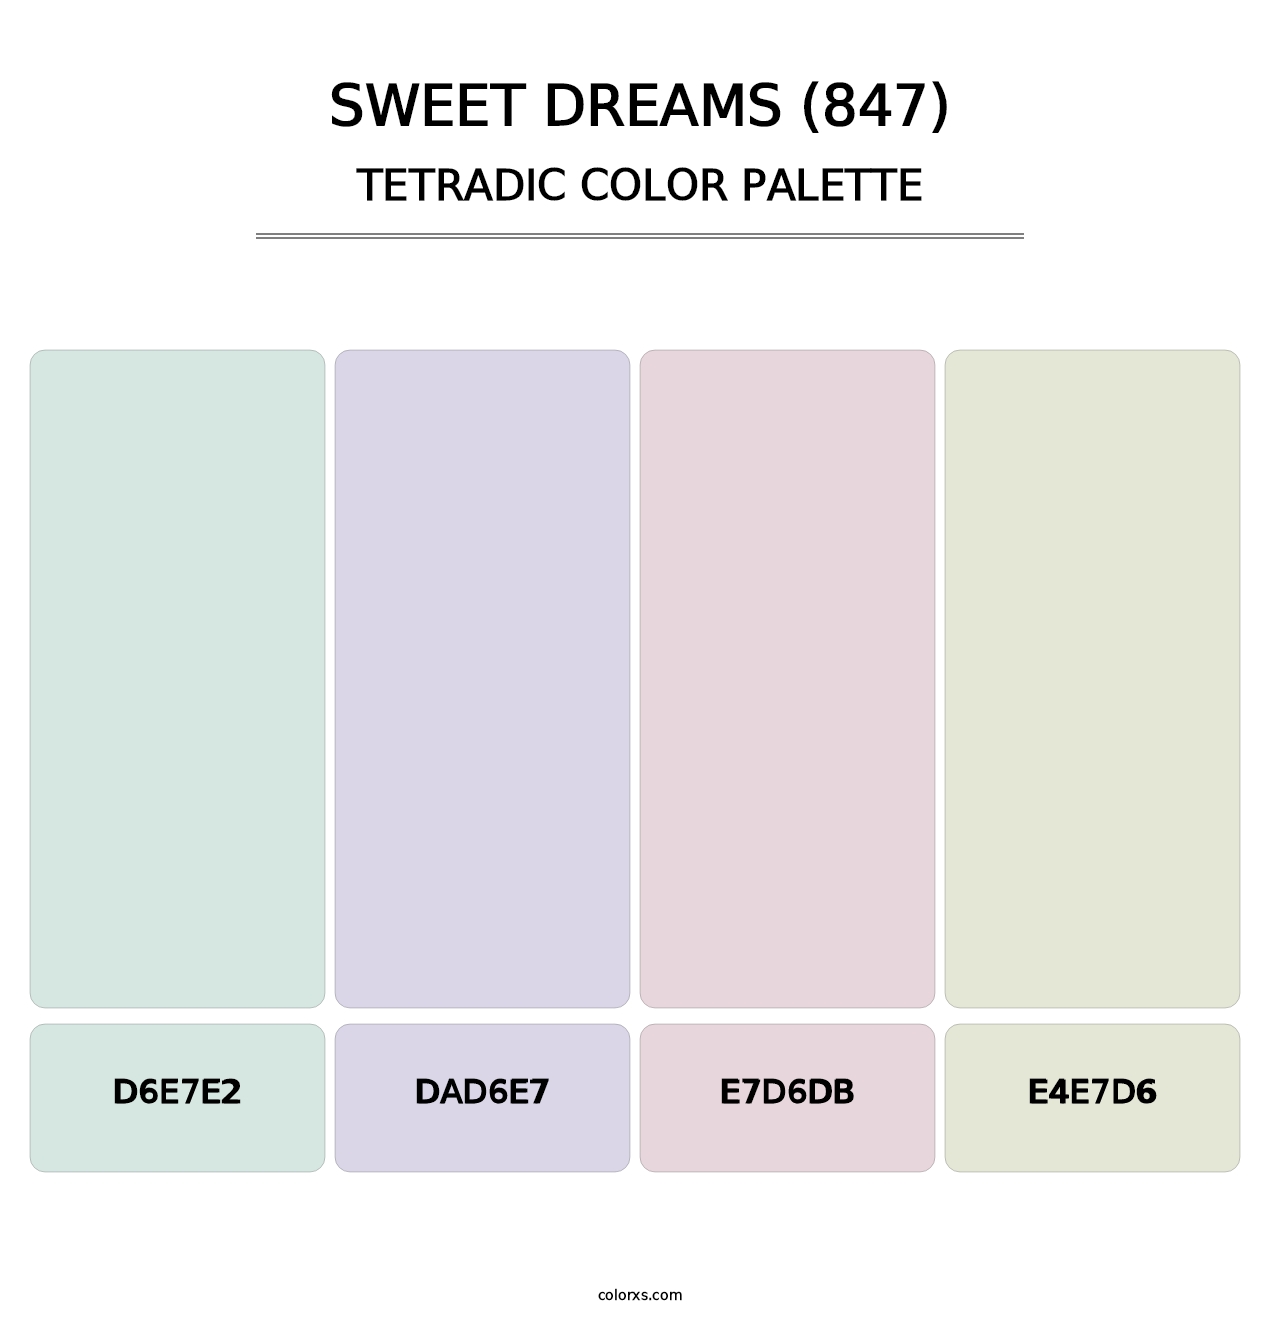 Sweet Dreams (847) - Tetradic Color Palette